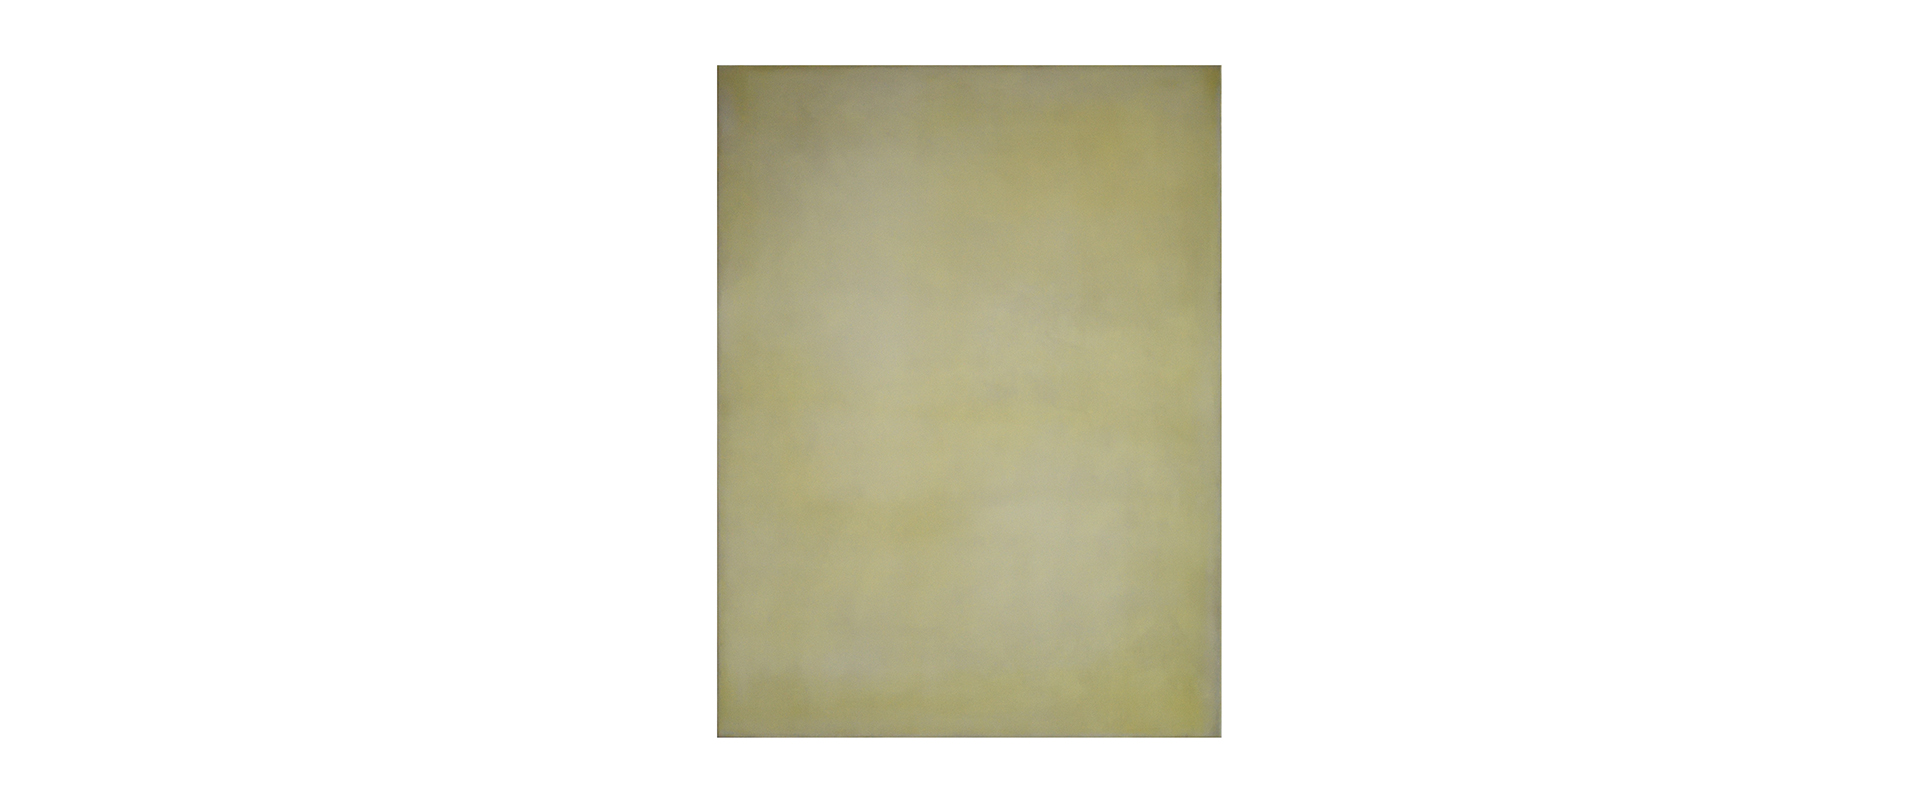 20211015 – 2021, Acryl auf Leinwand, 120 x 90 cm